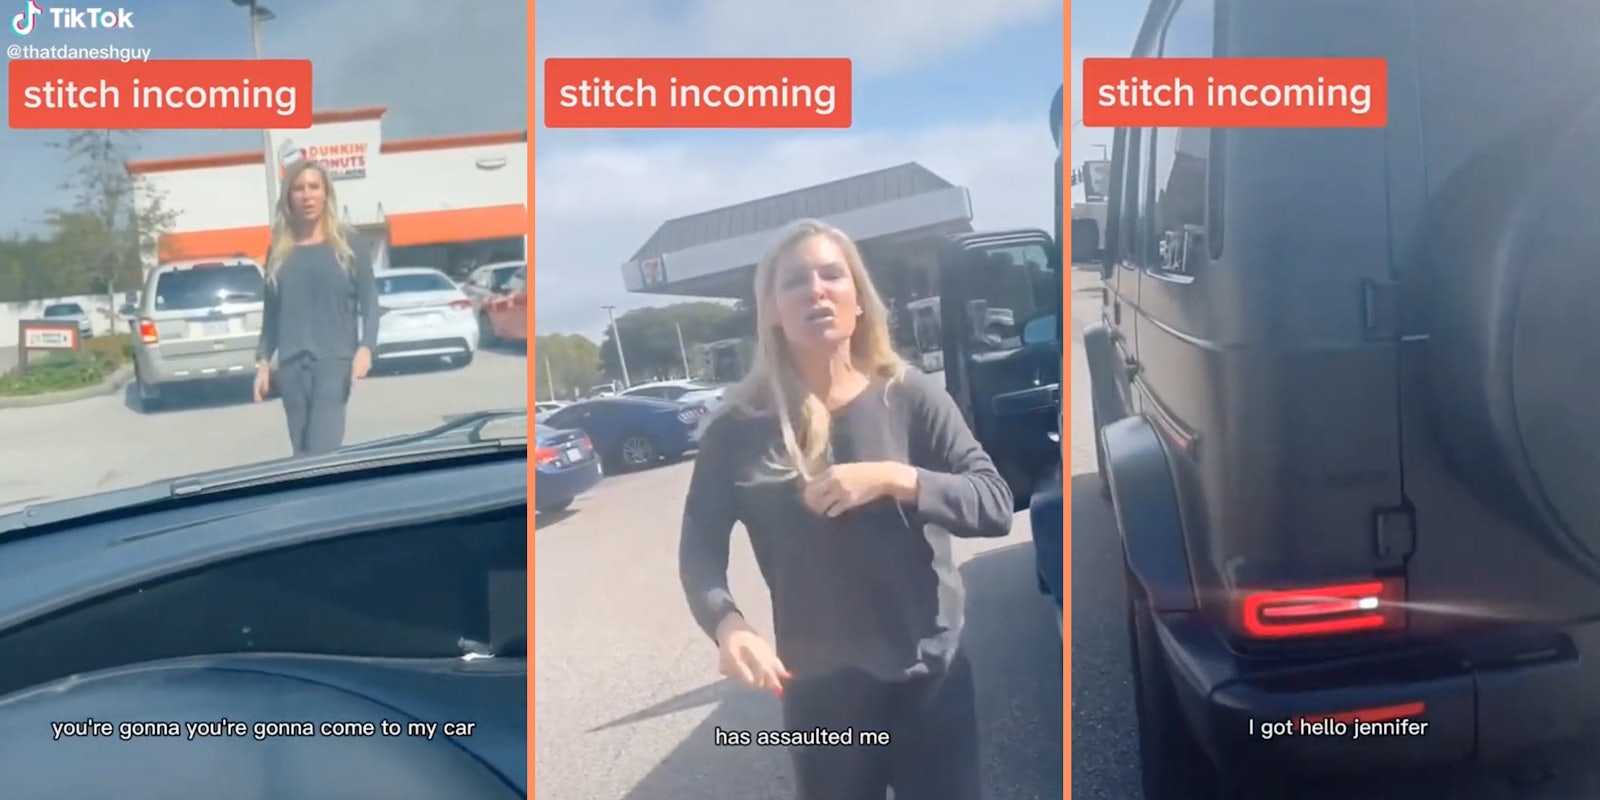 TikTok shows woman trying to run over TikToker in Dunkin' parking lot.